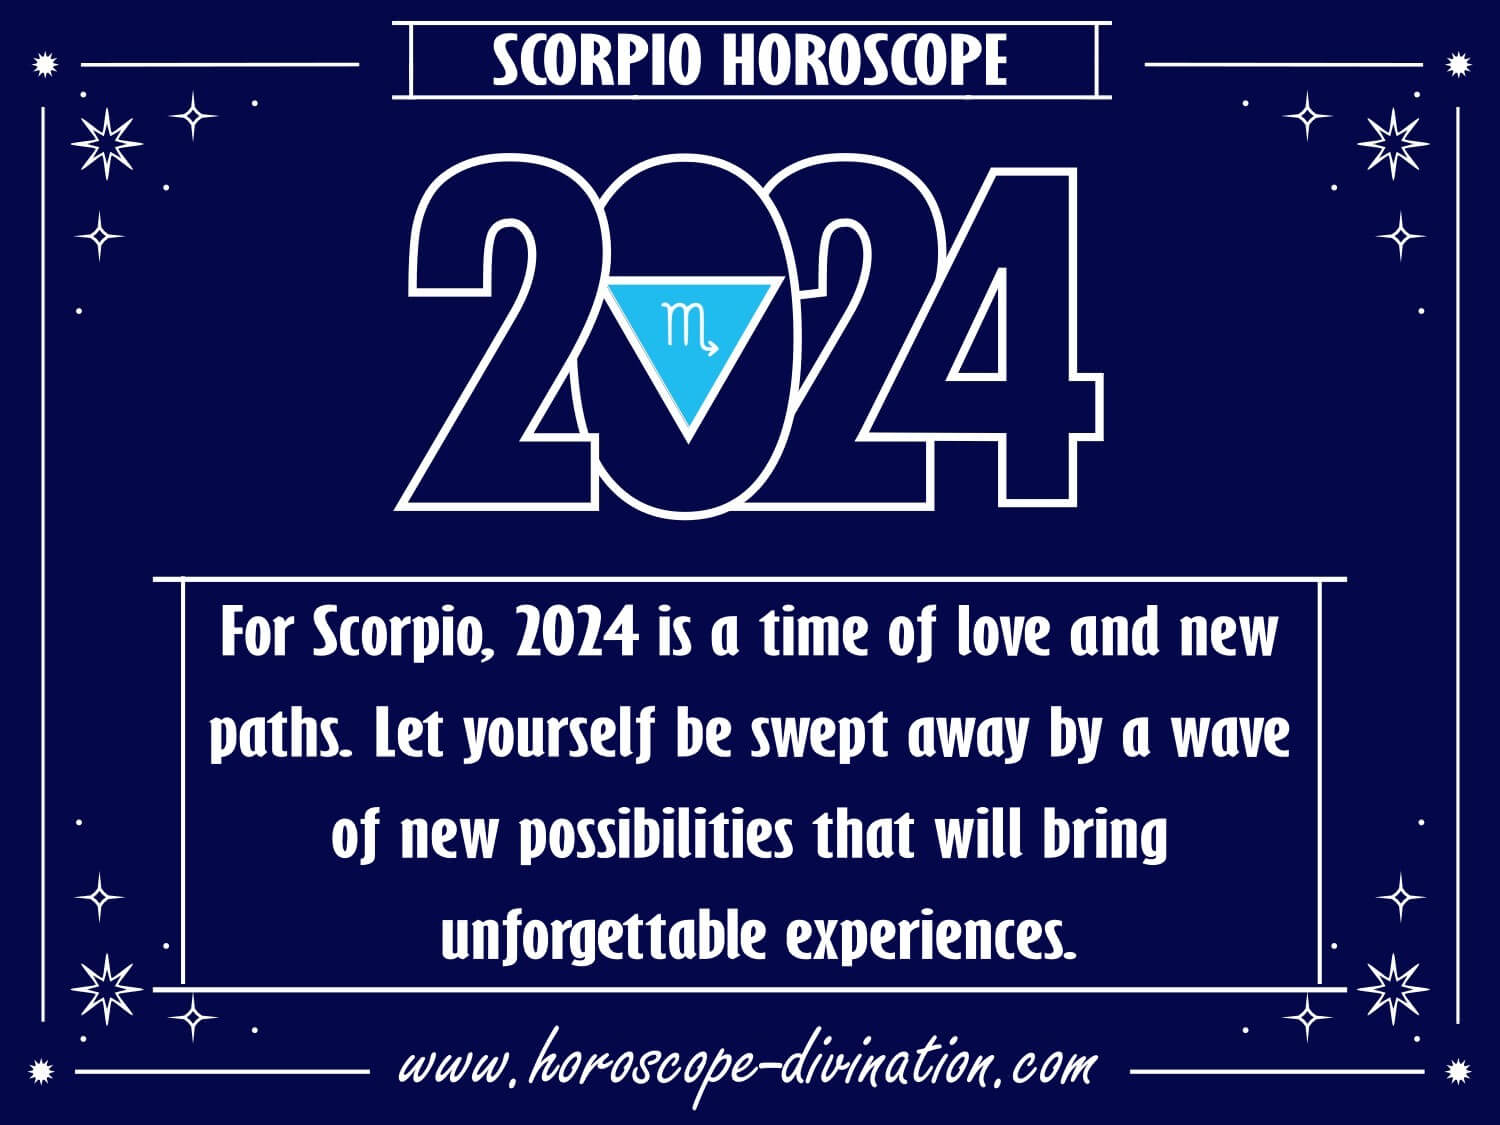 Scorpio Horoscope 2024 Yearly predicton on